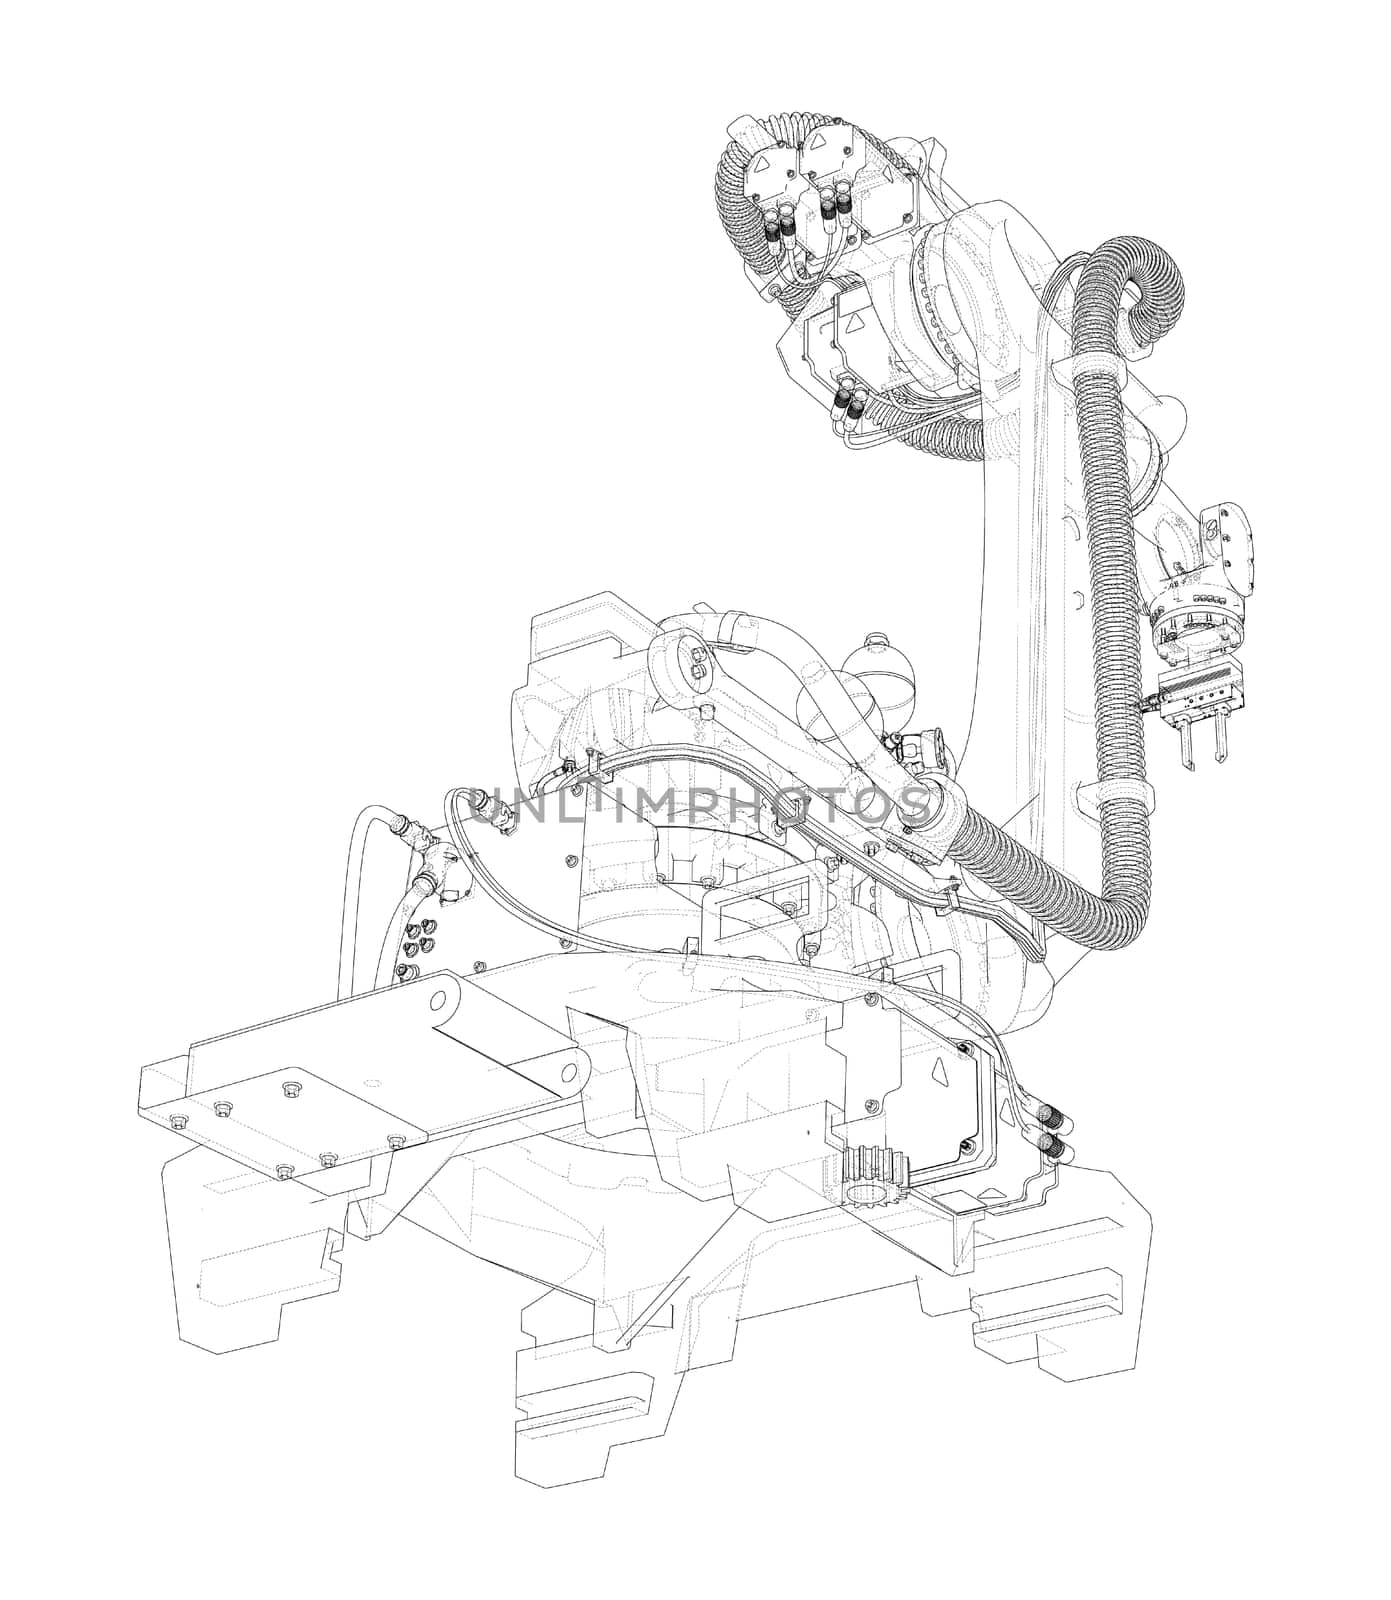 Industrial robot manipulator. 3d illustration in sketch style or blueprint